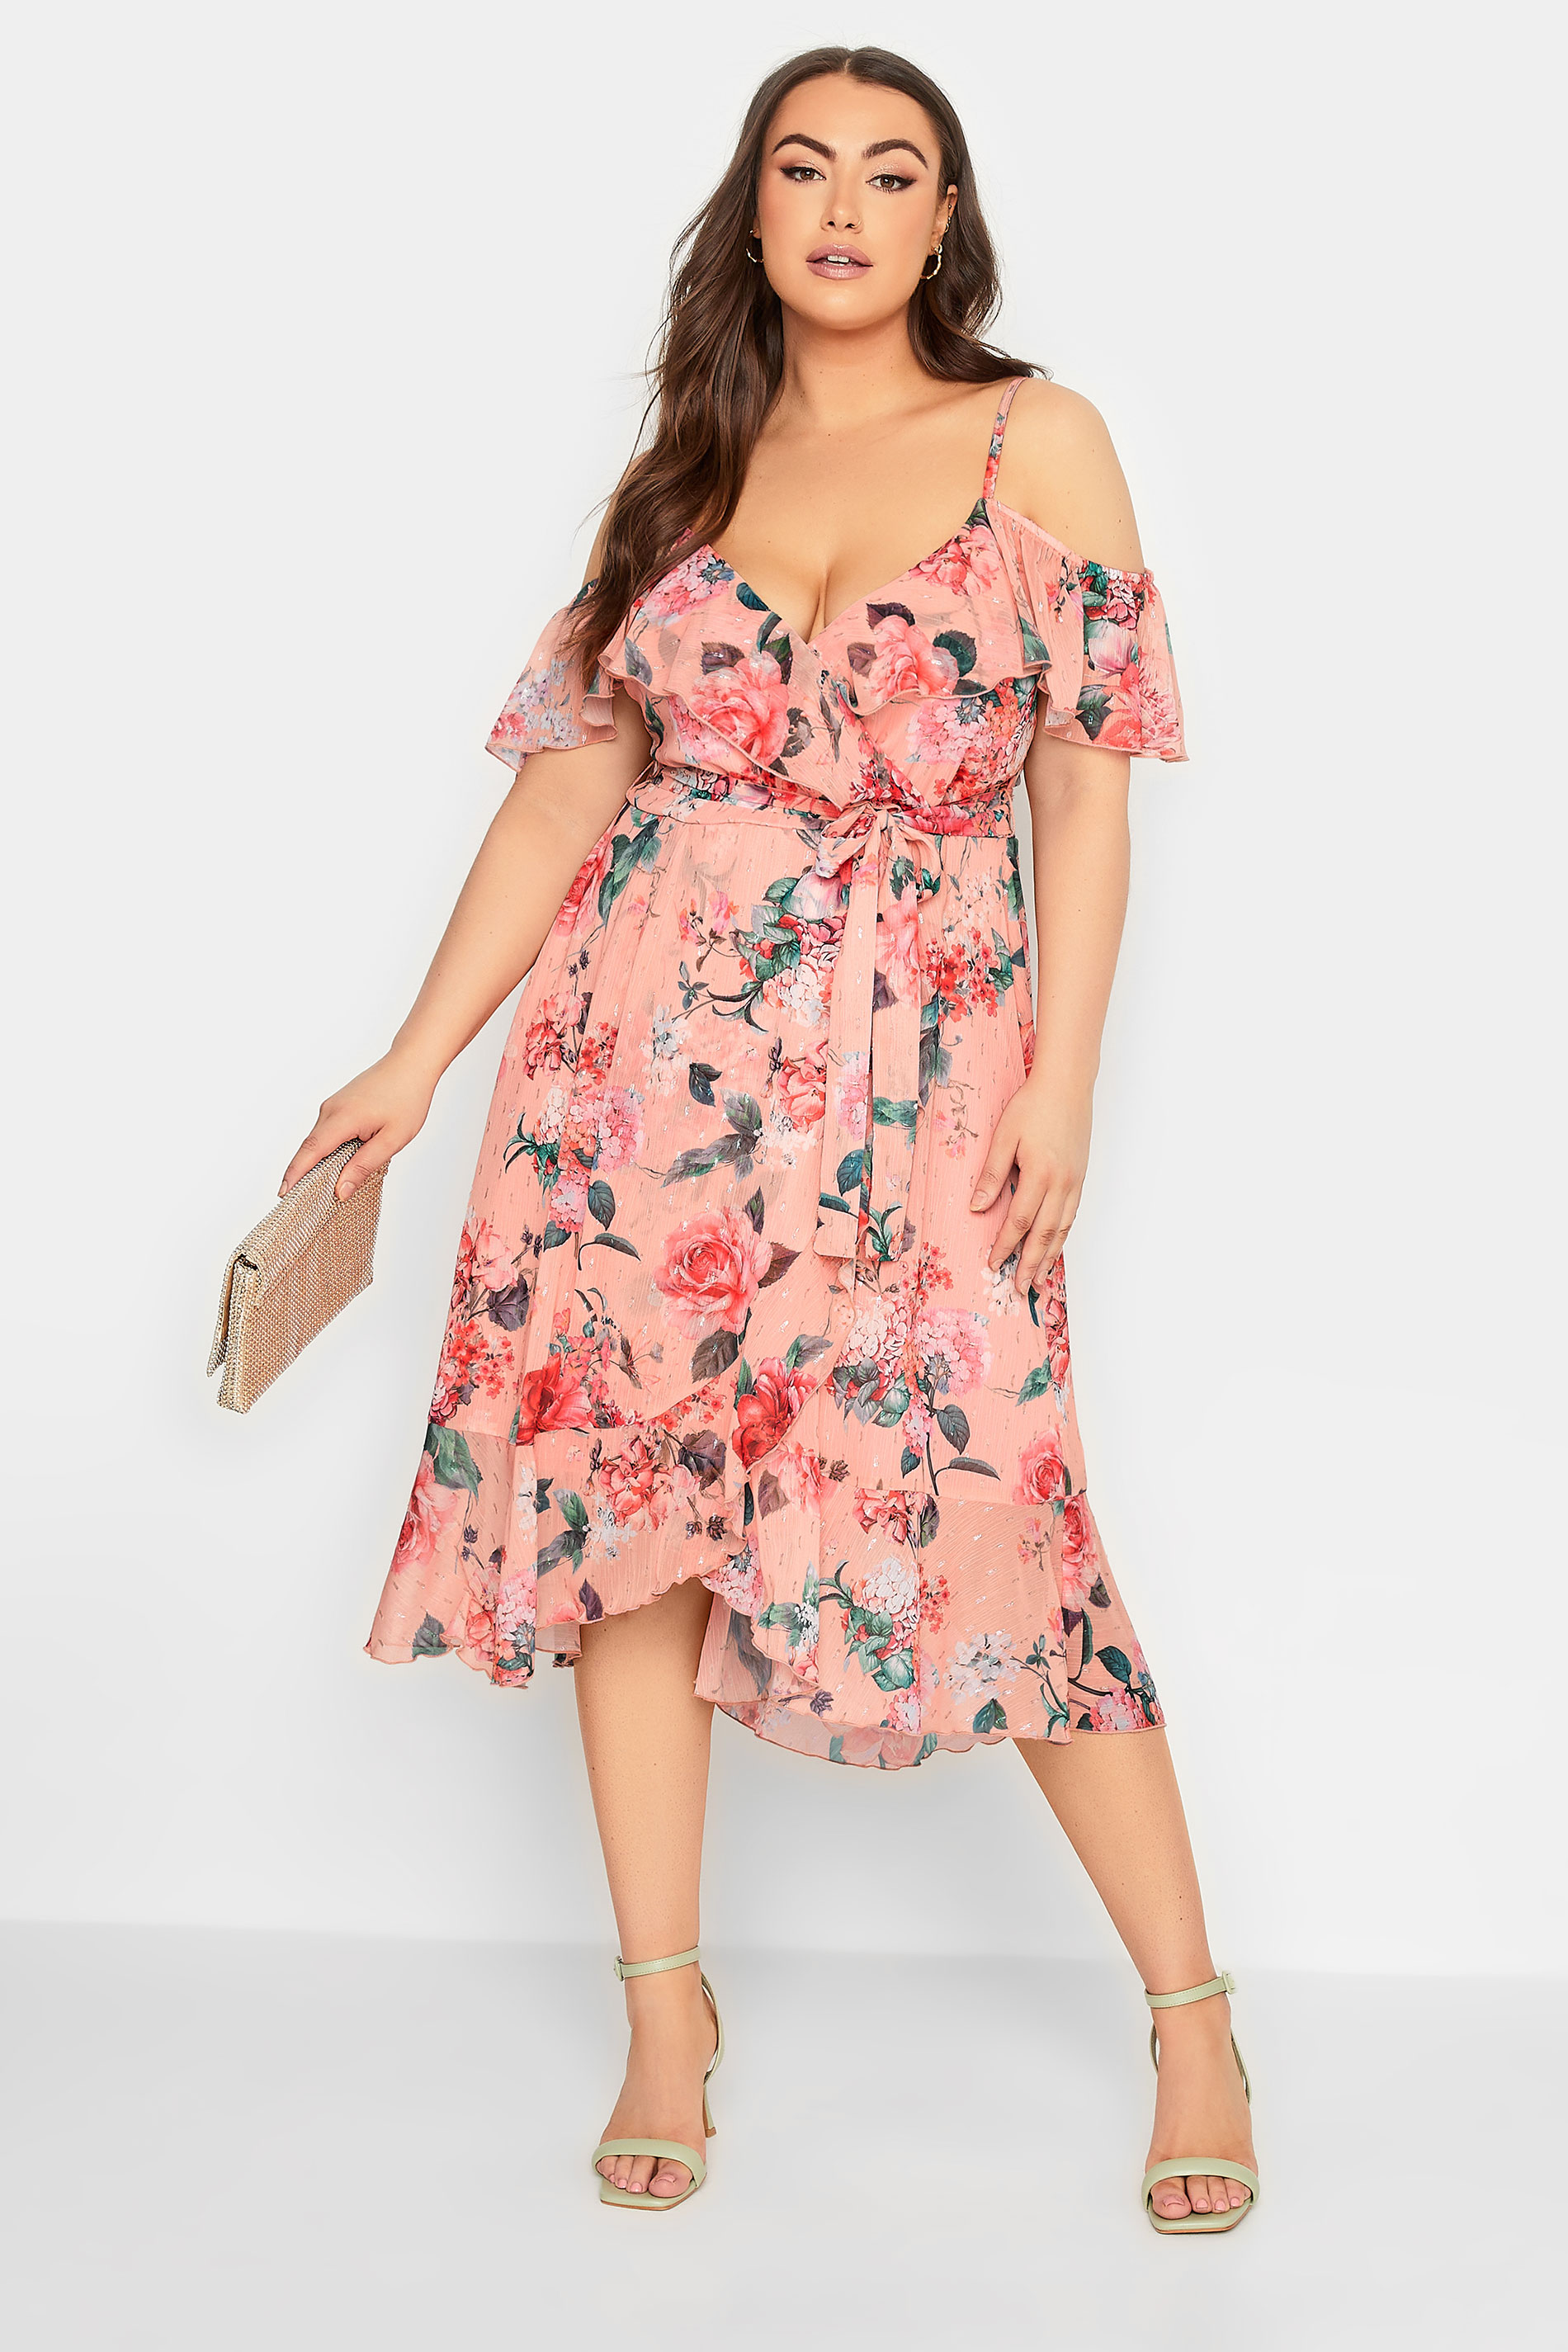 YOURS LONDON Curve Plus Size Pink Cold Shoulder Floral Wrap Dress | Yours Clothing  1